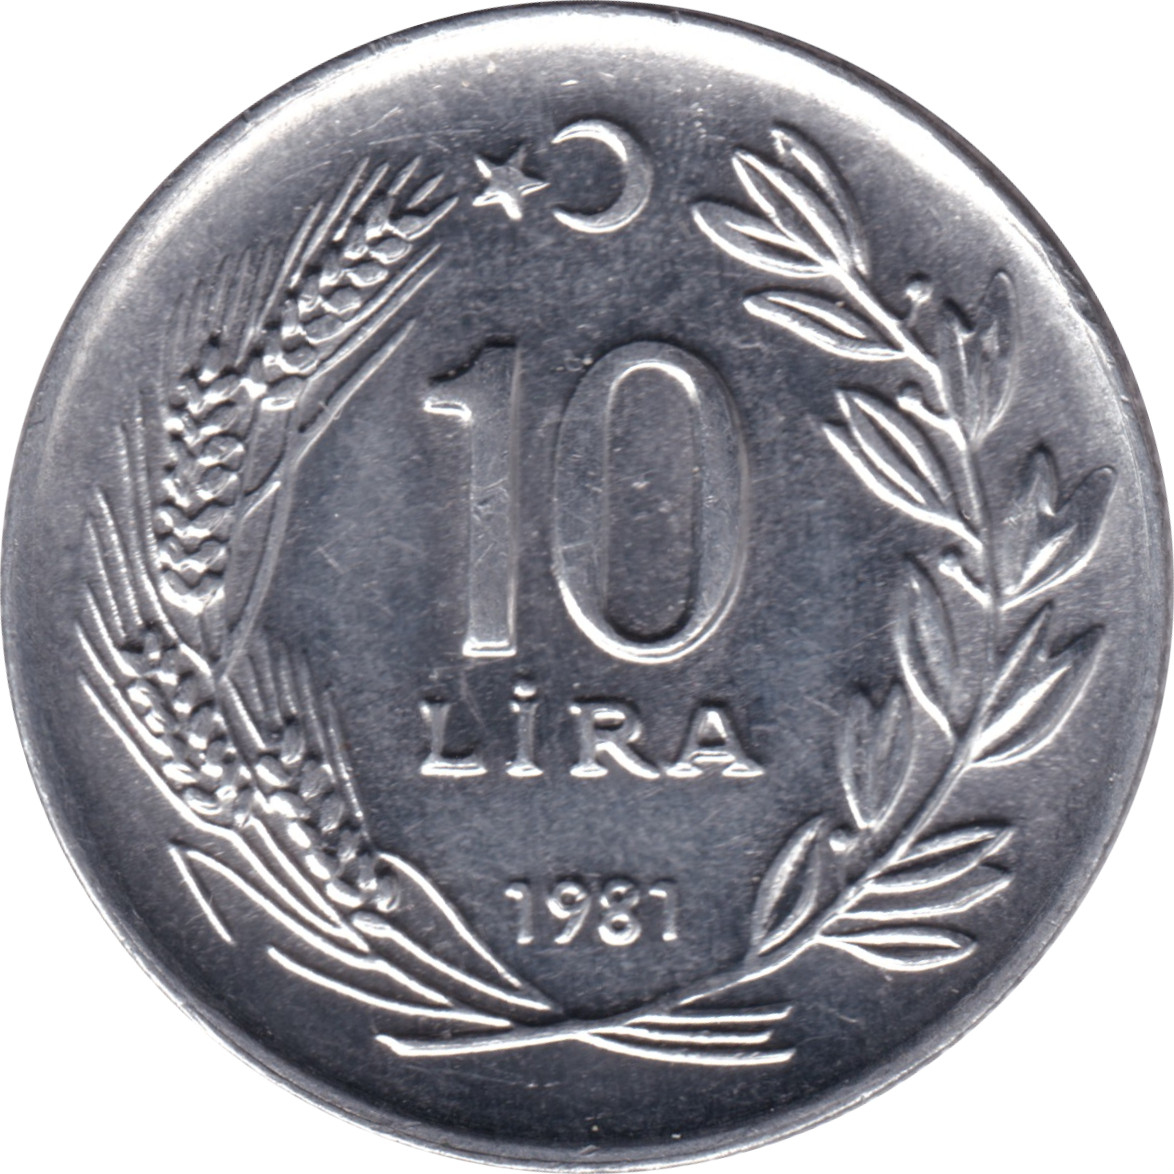 10 lira - Moustafa Kemal • Buste